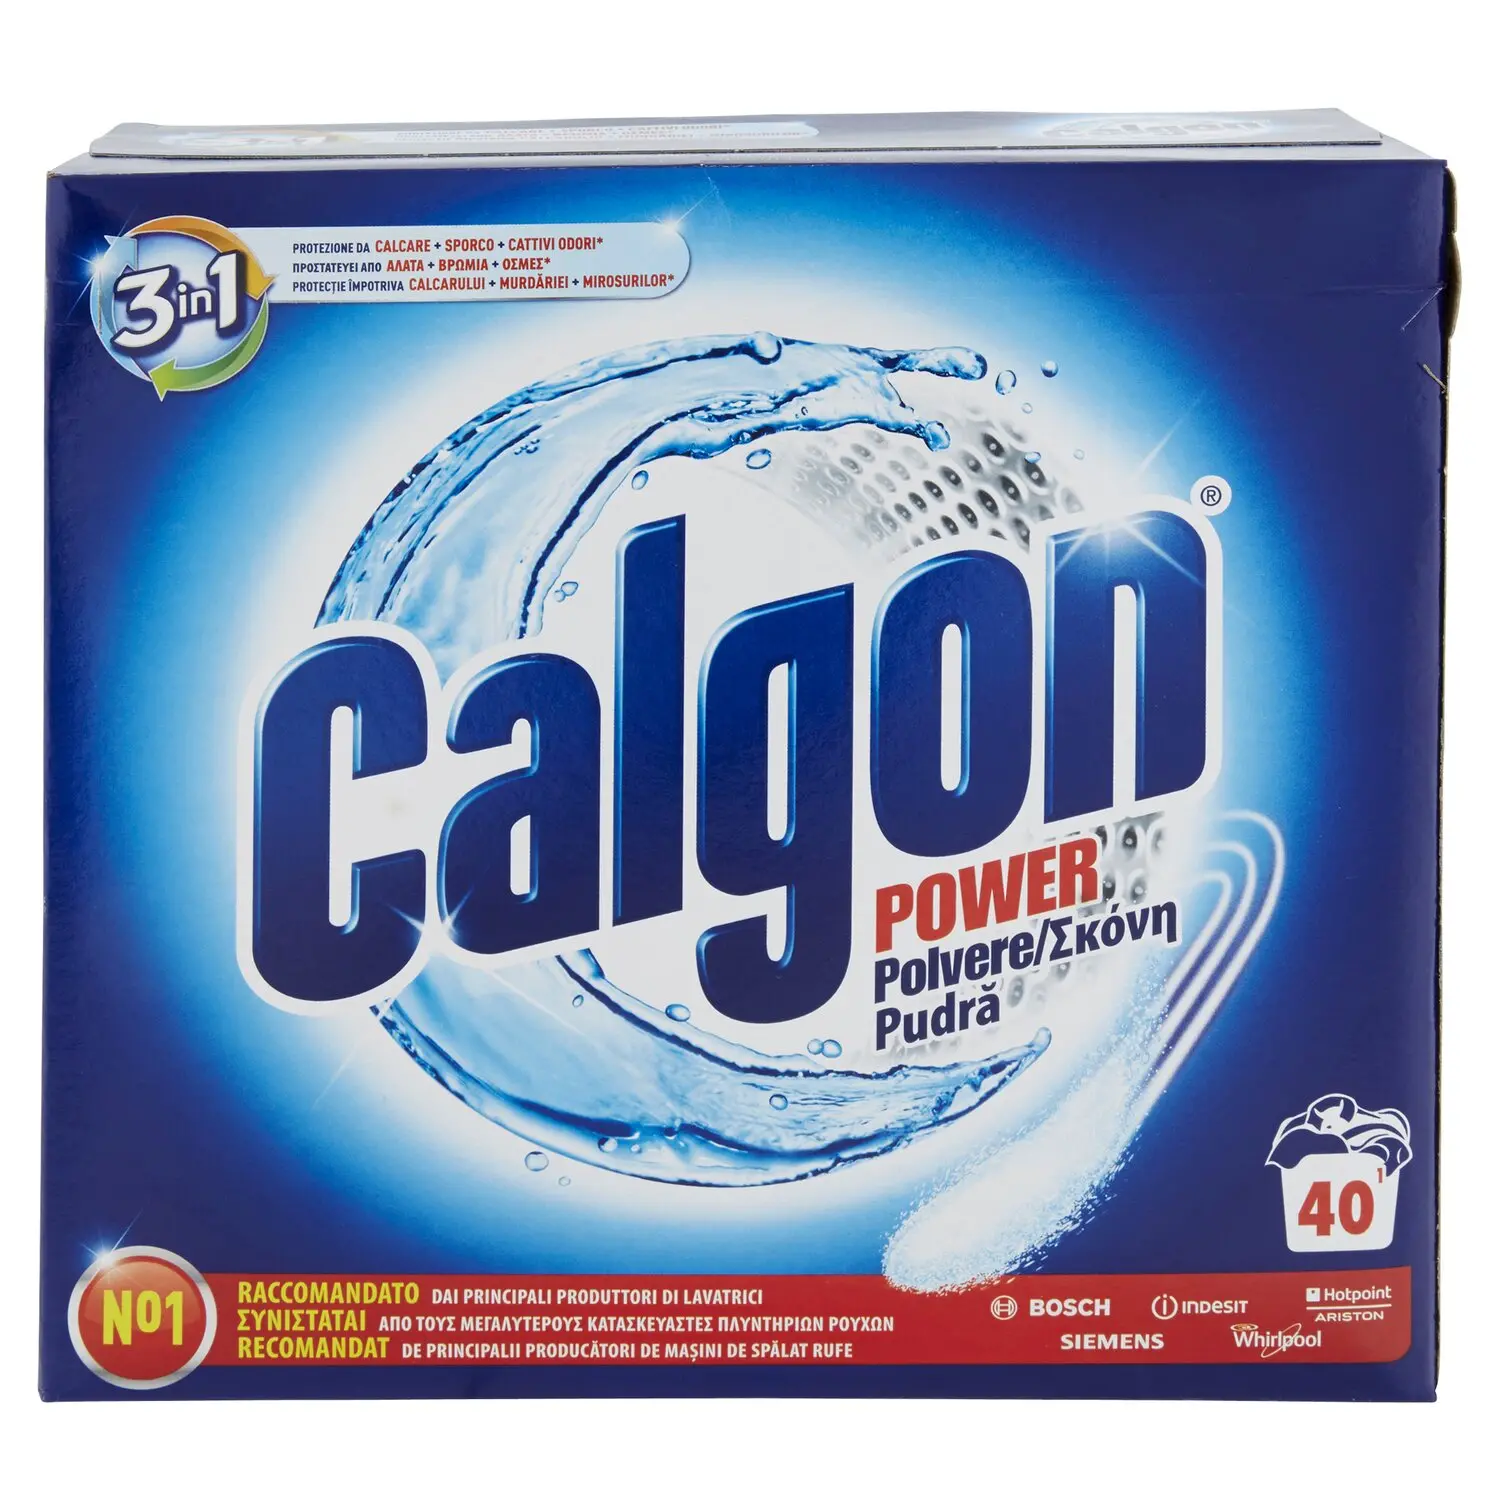 Calgon Power Gel capi morbidi anticalcare 750 ml